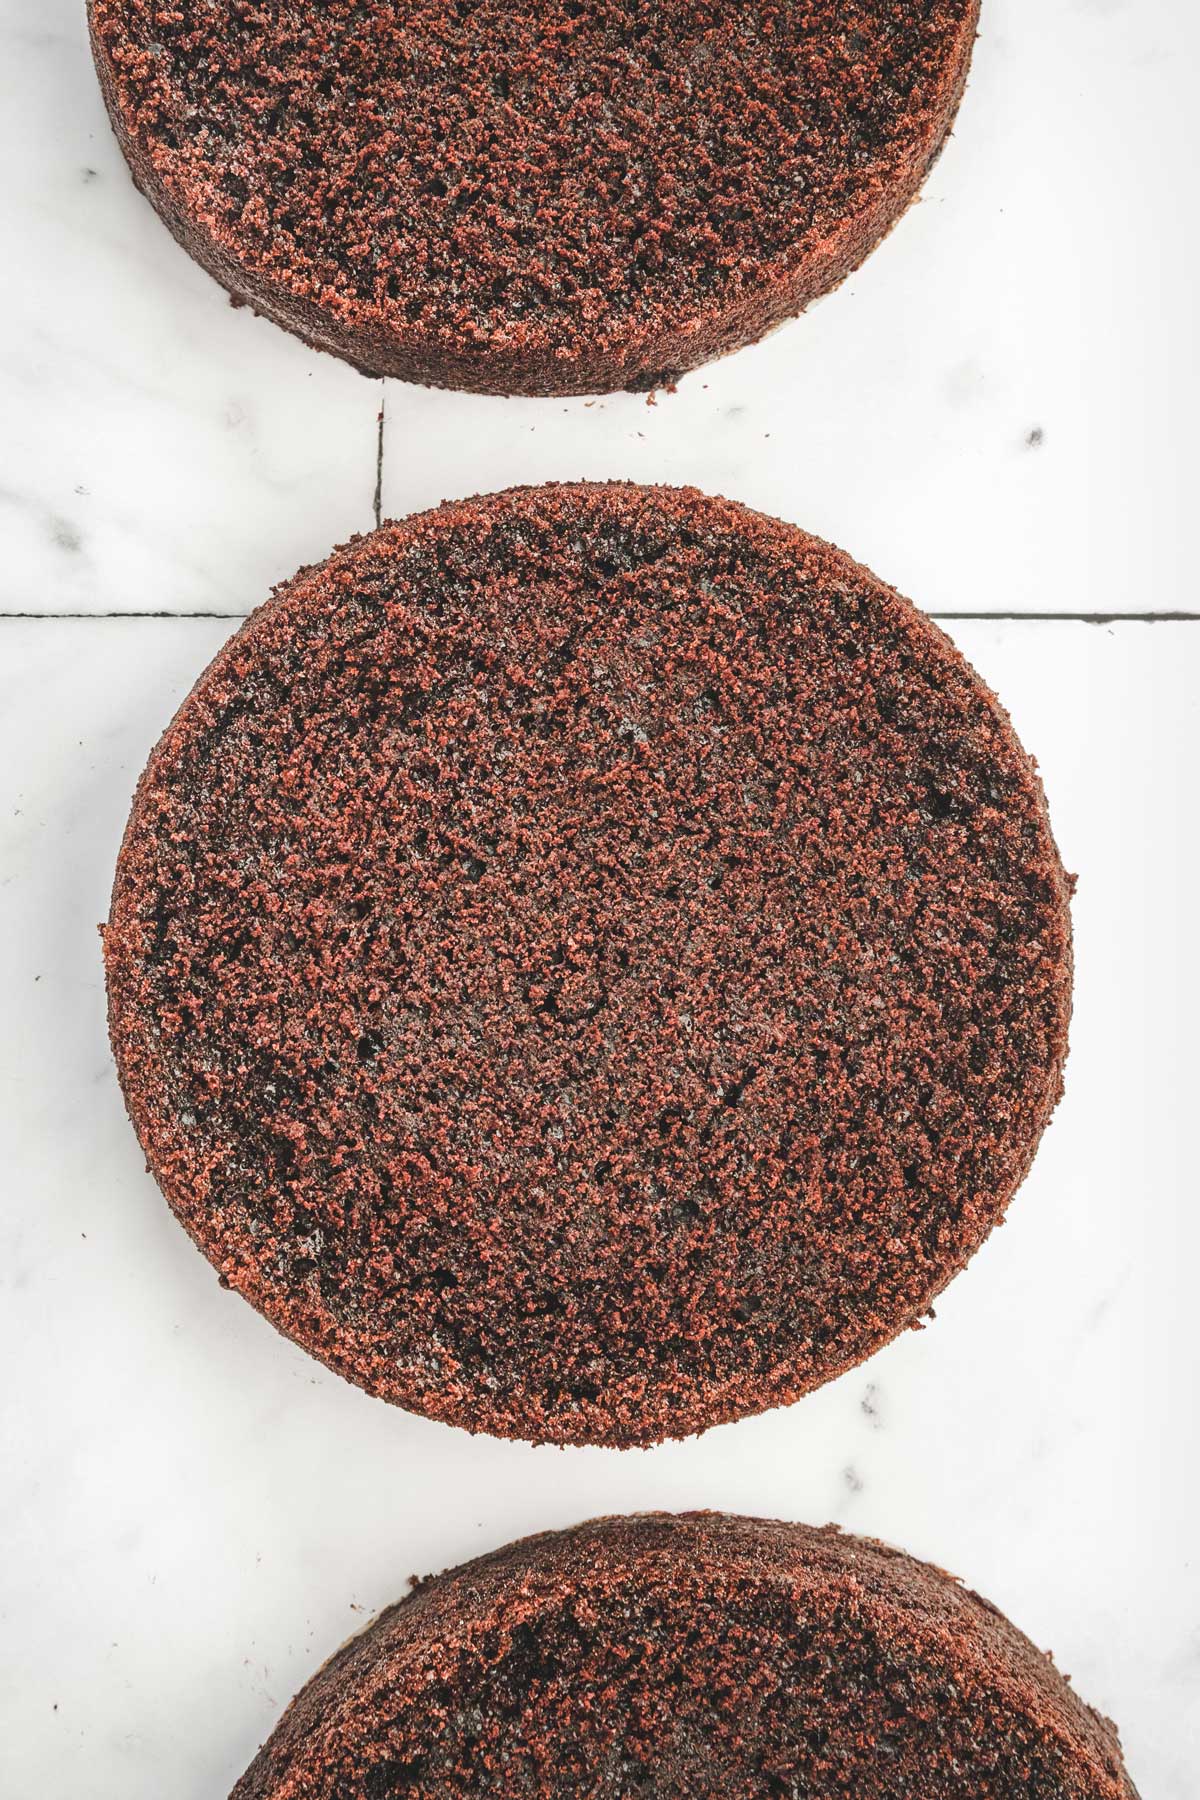 Chocolate cake layers